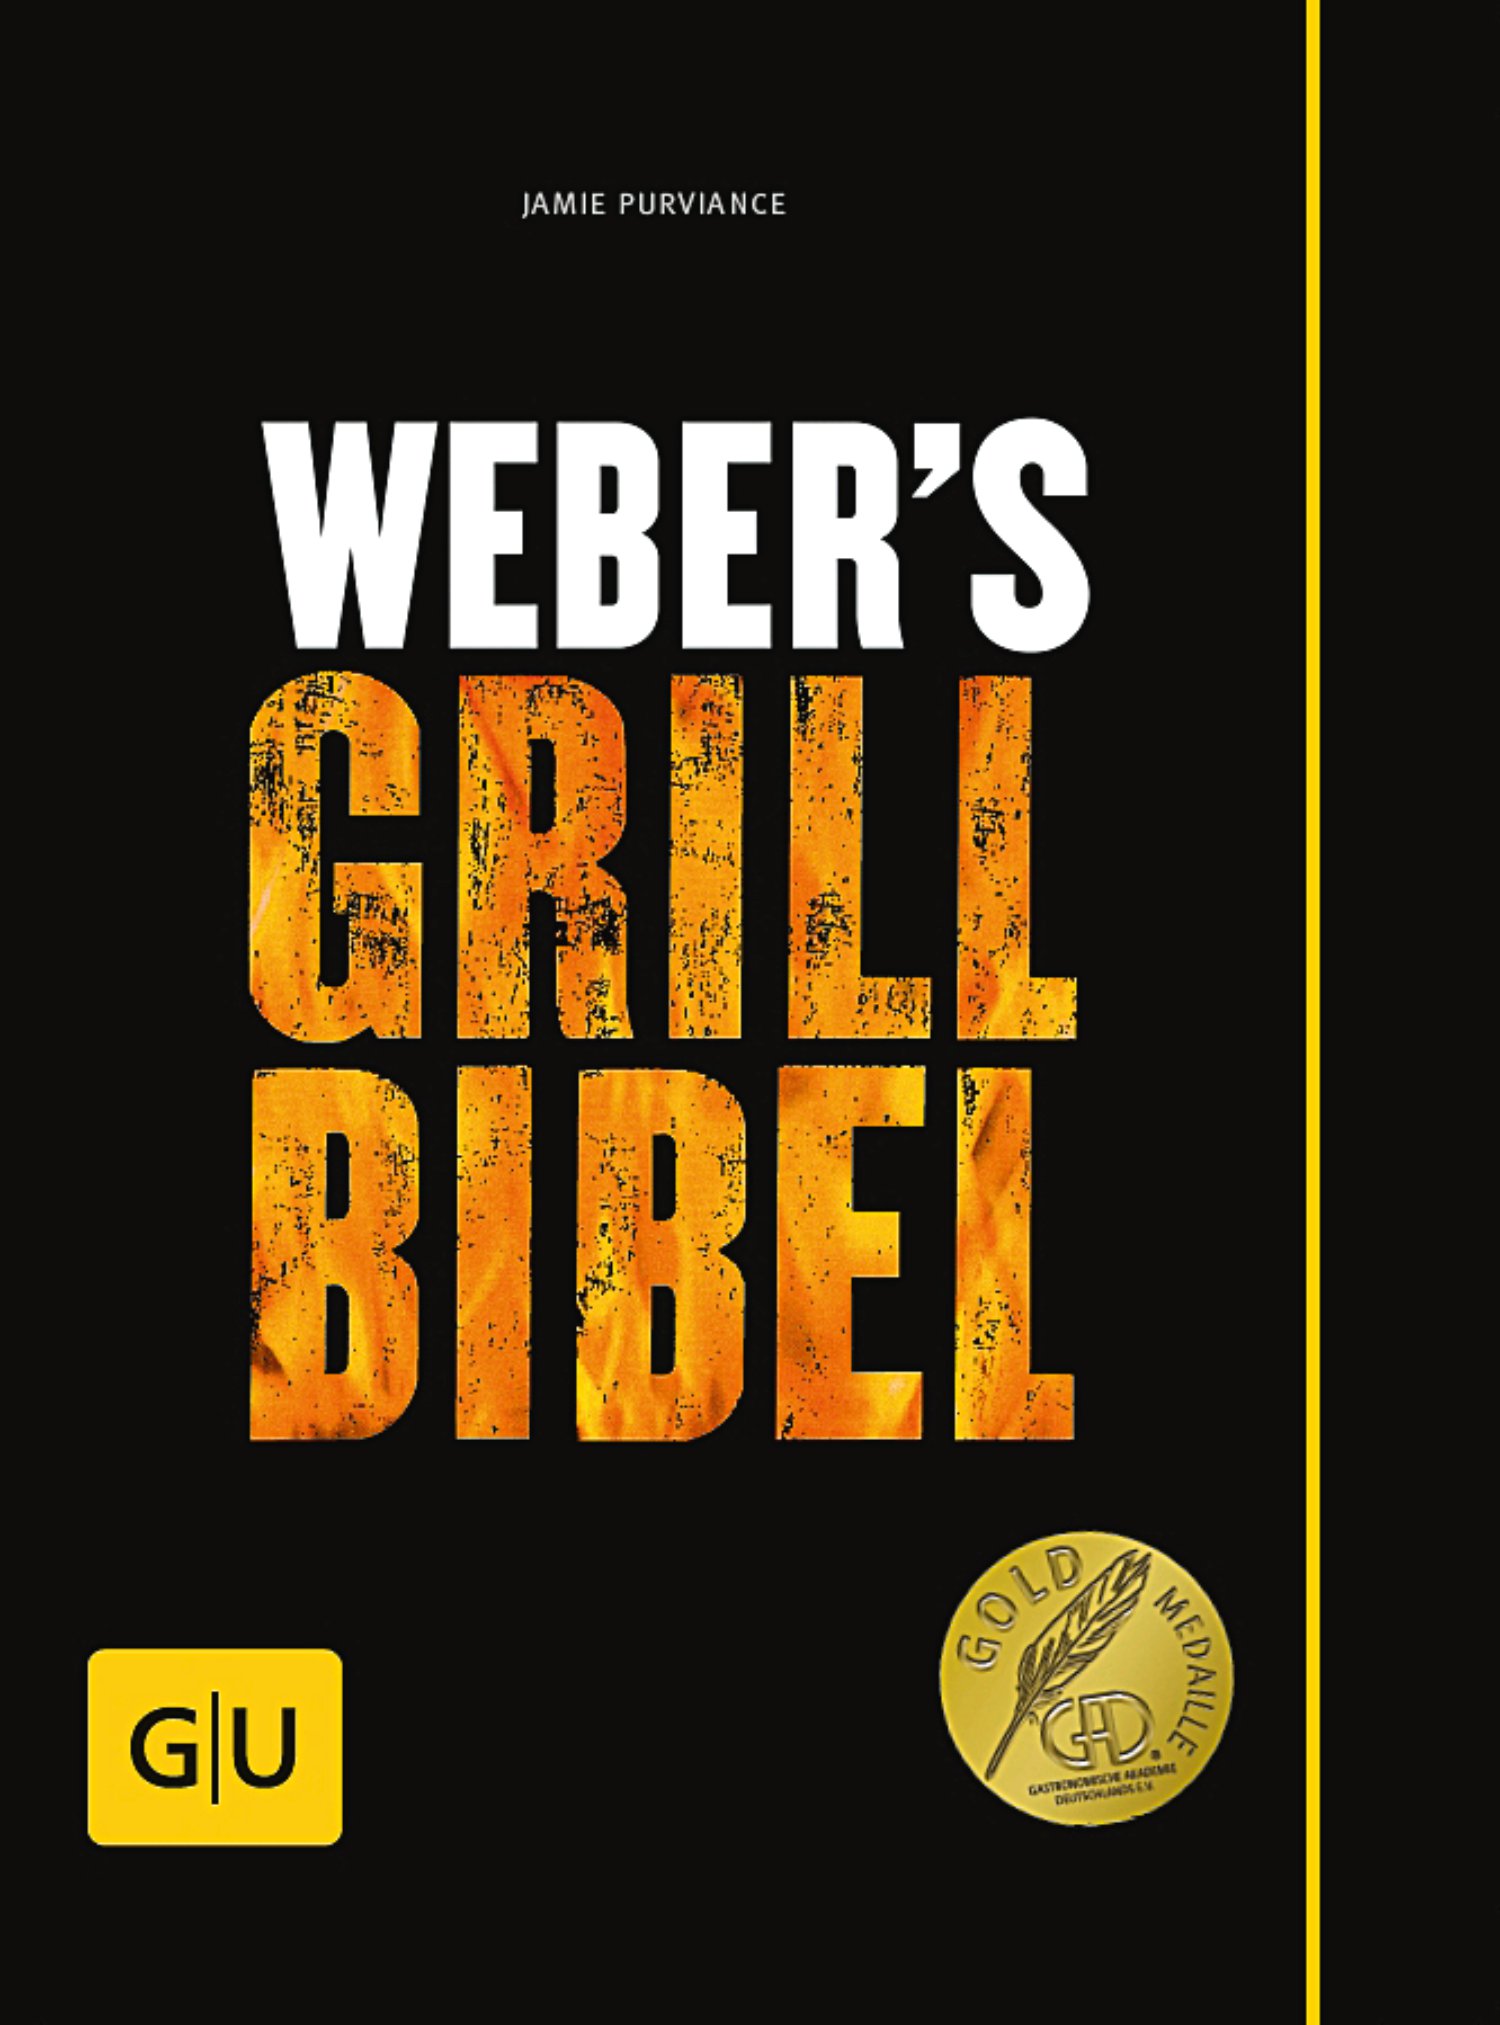 WEBER® Grillbuch WEBER®’s Grillbibel